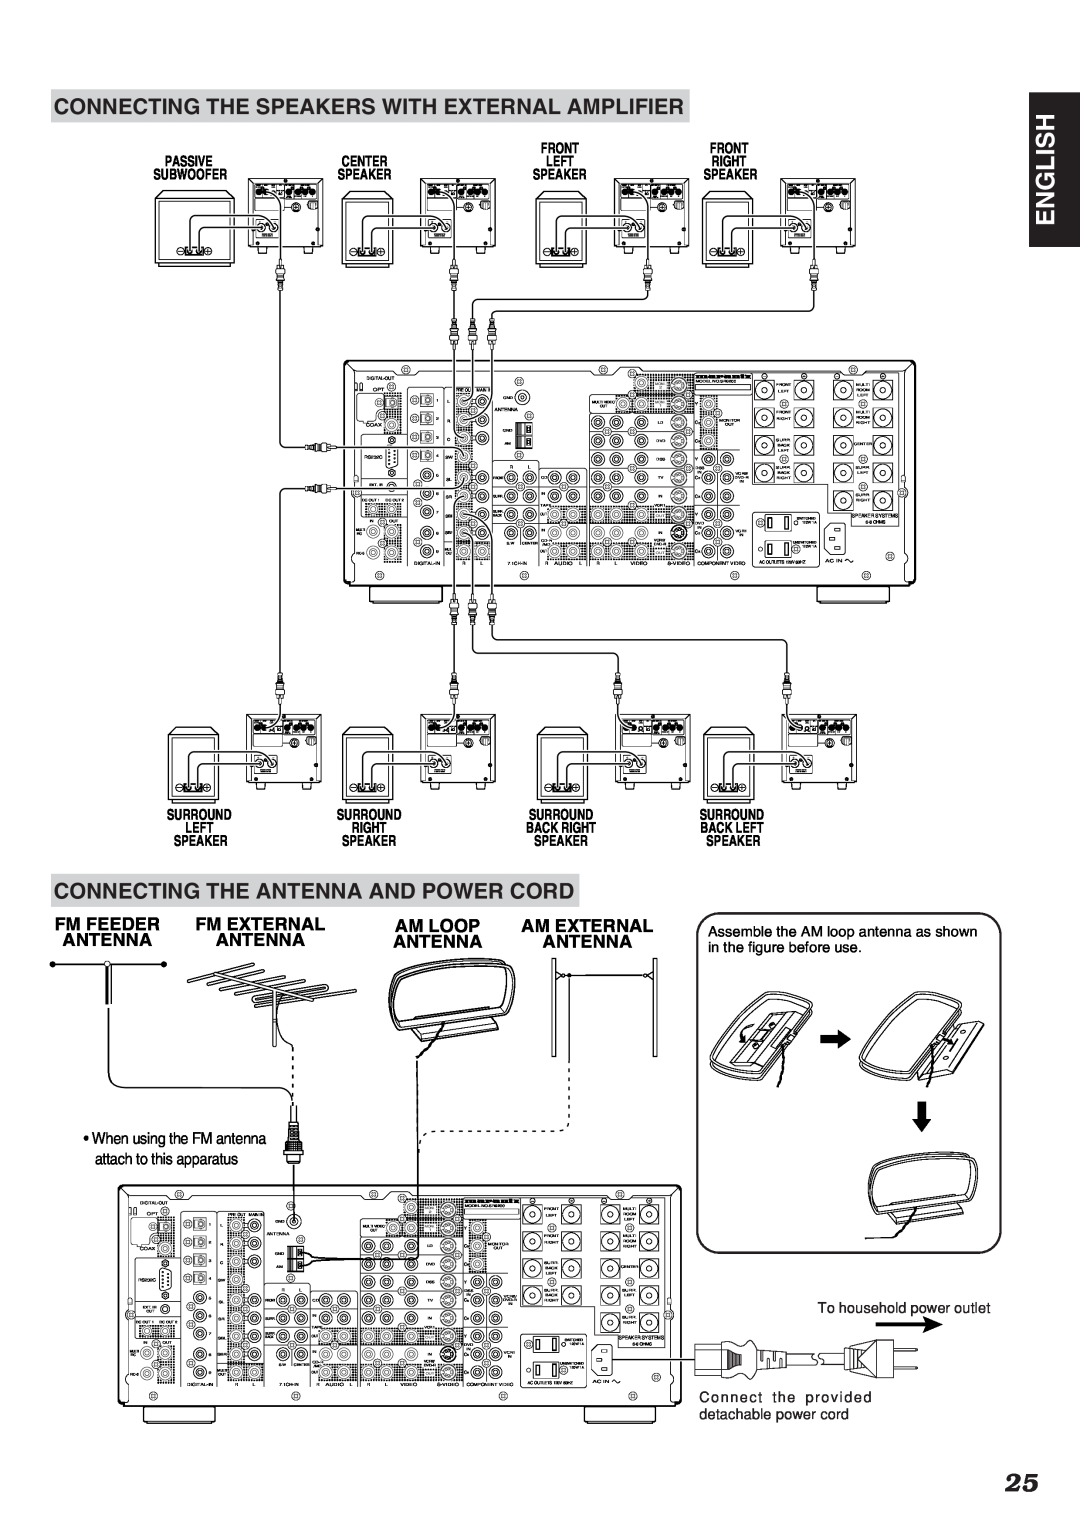 Marantz SR9200 manual English, Fm Feeder, Fm External, Am Loop, Am External, Antenna 